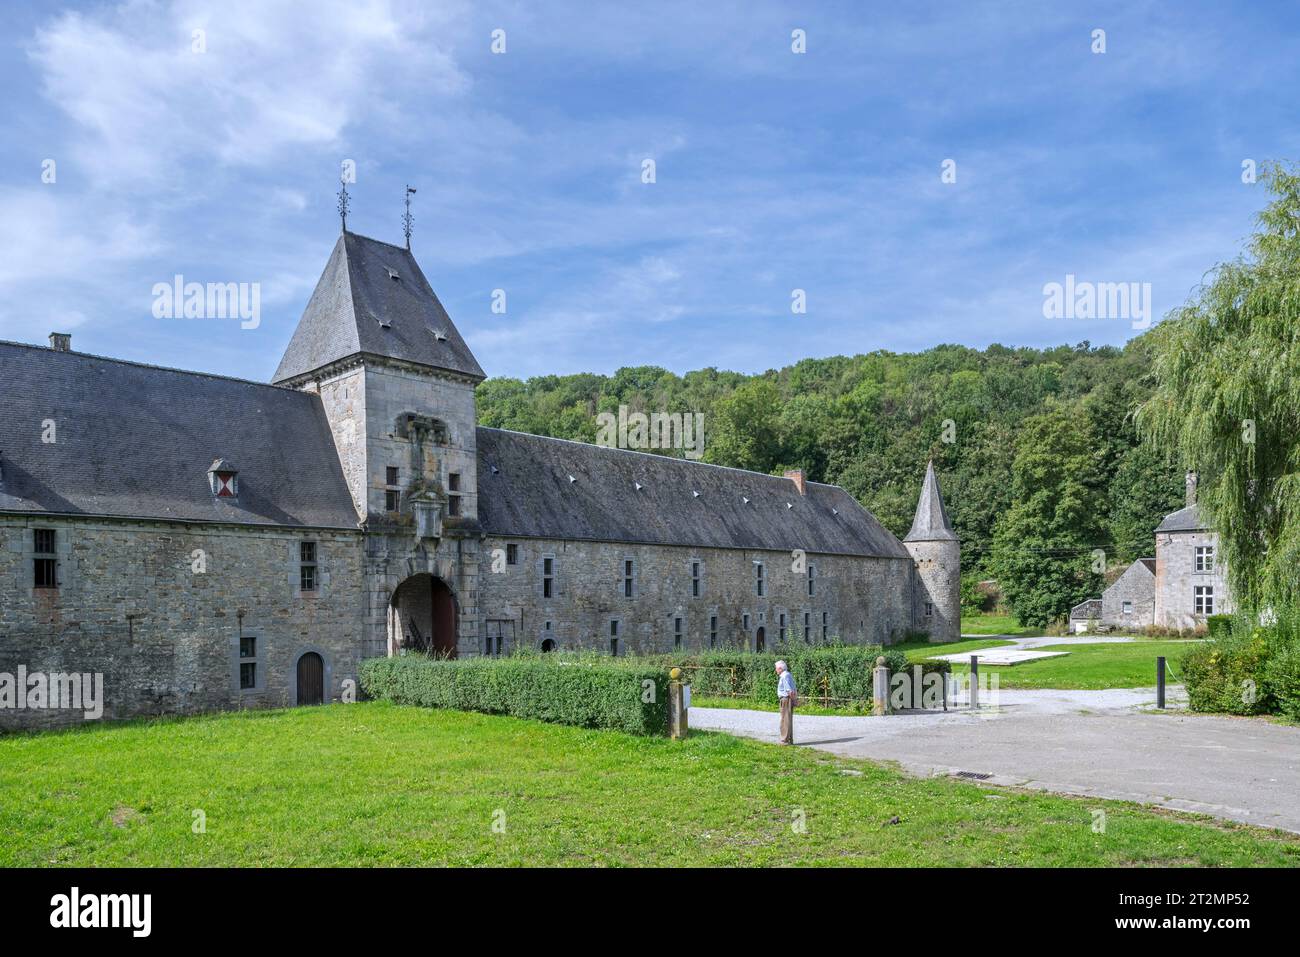 Château de Spontin, entrance gate of medieval 16th century moated castle near Yvoir, province of Namur, Belgian Ardennes, Wallonia, Belgium Stock Photo